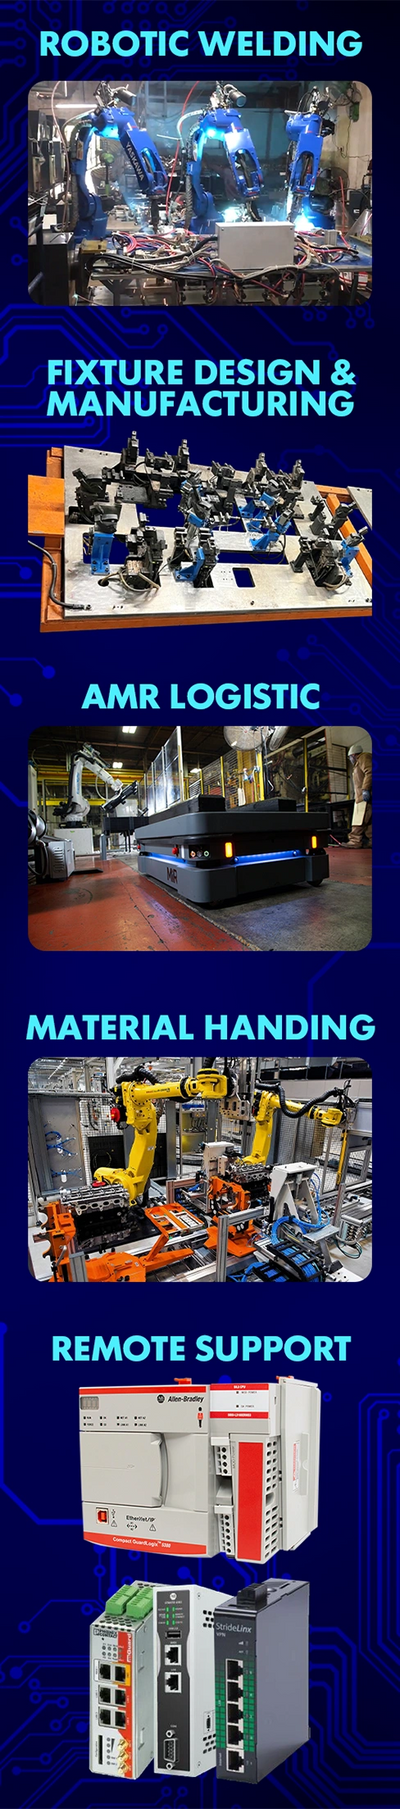 Elite Automation Robotic Welding Cell, Robotic Welding Fixture, AMR Solution & Service